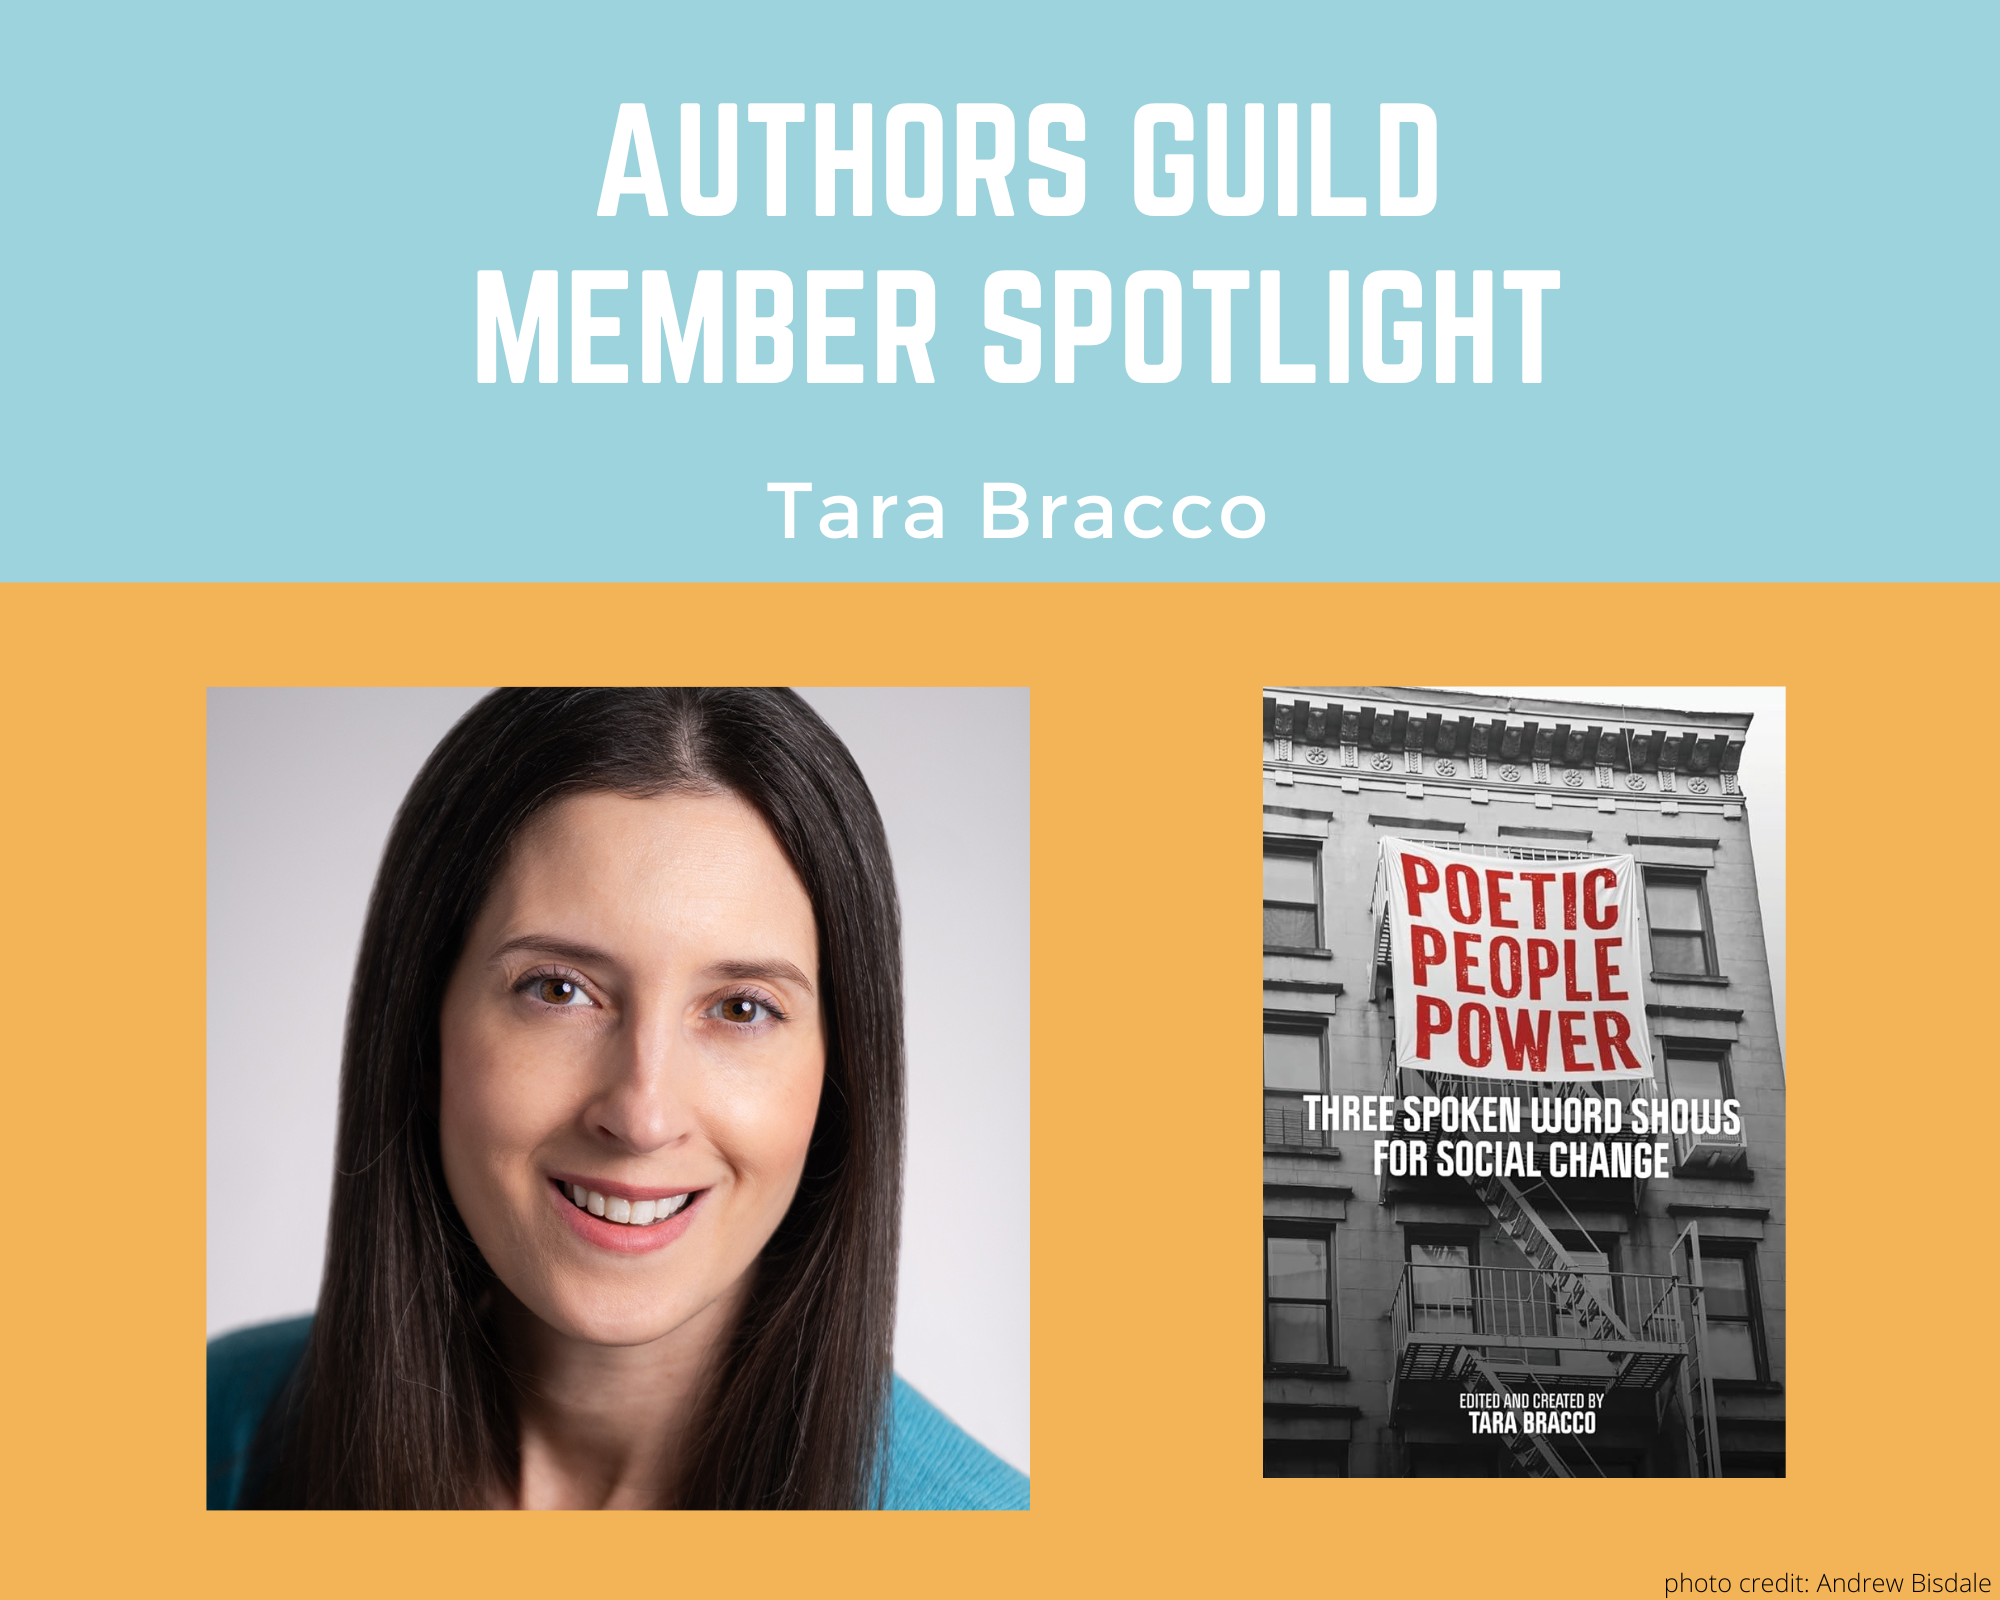 author Tara Bracco and her book Poetic People Power